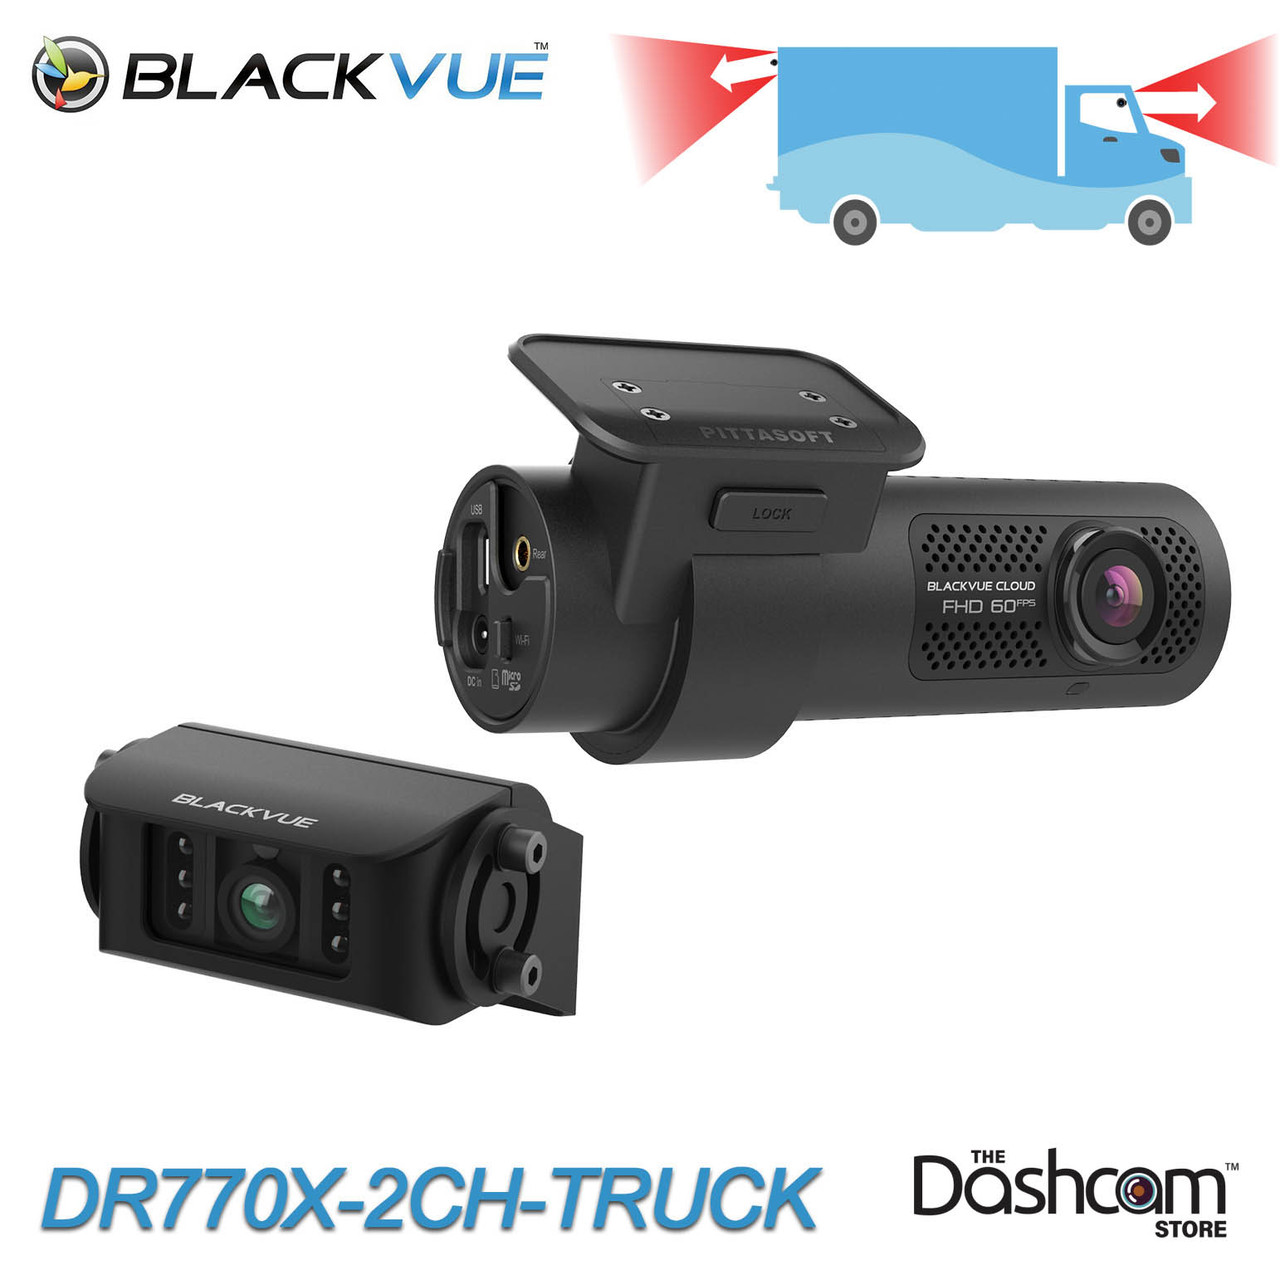 BlackVue DR770X-2CH-TRUCK dash cam hero image thumbnail